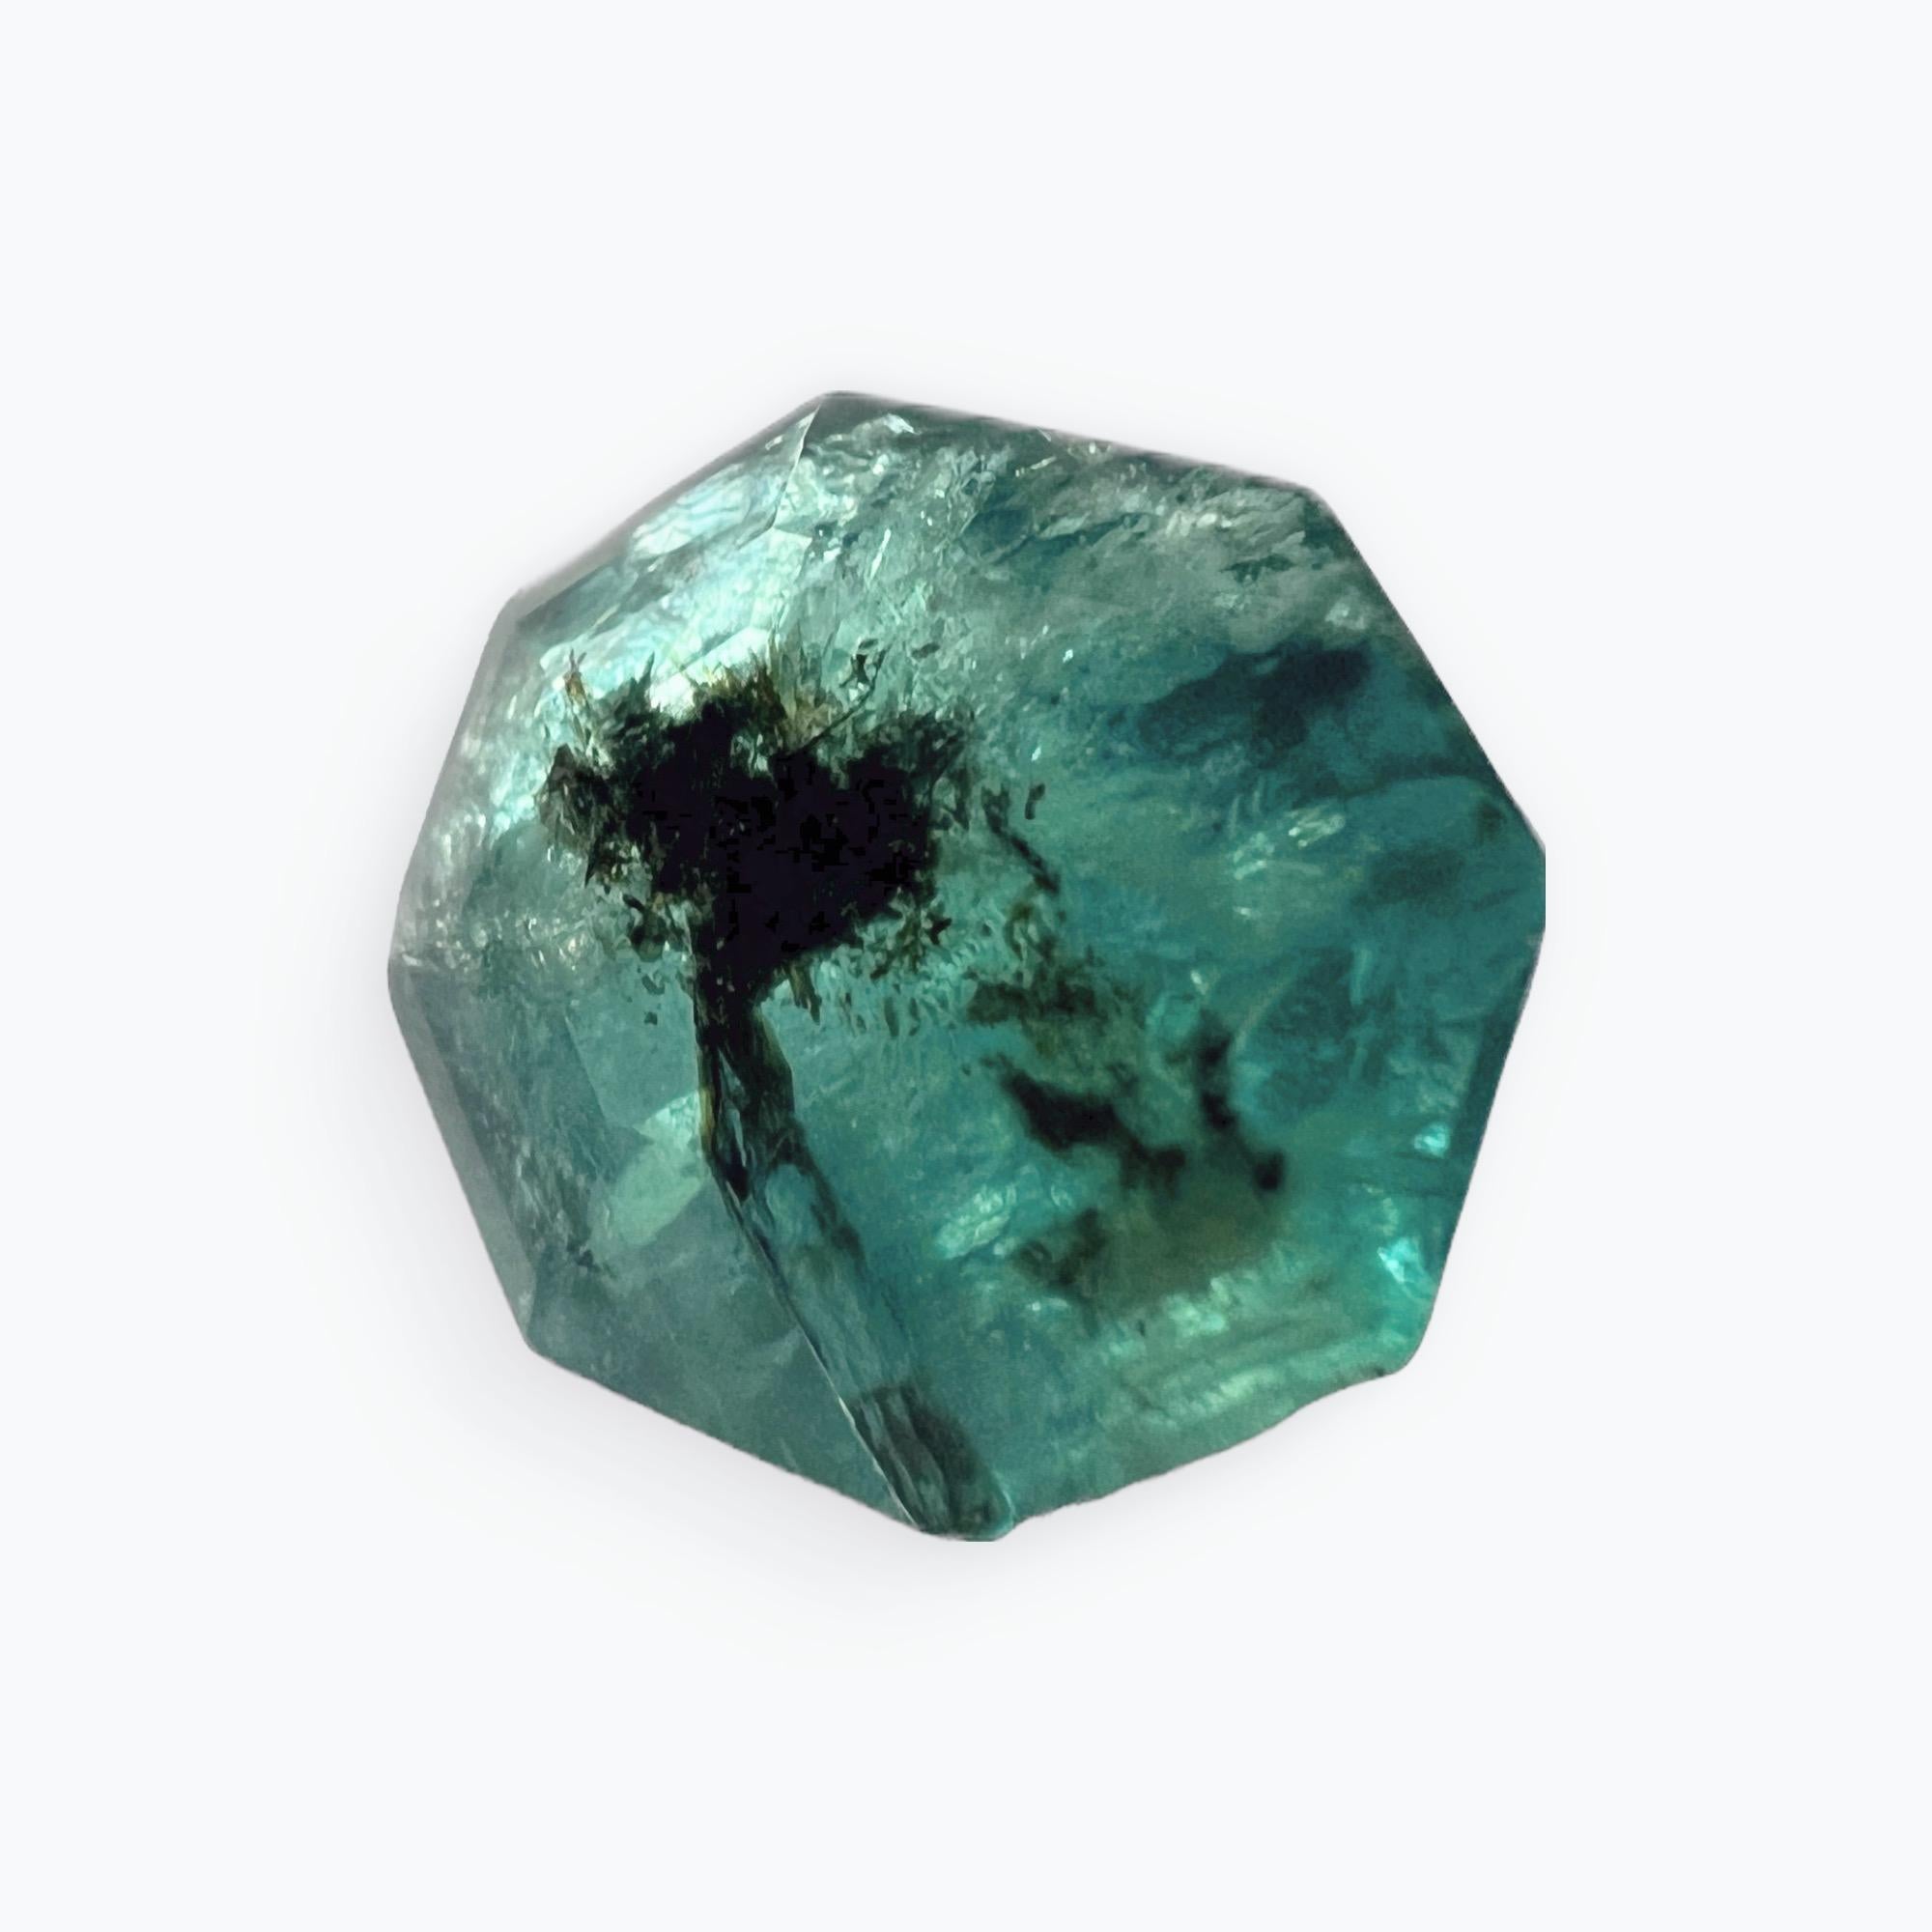 8.85ct Asscher Cut No-Oil Natural Untreated Emerald Gemstone For Sale 9